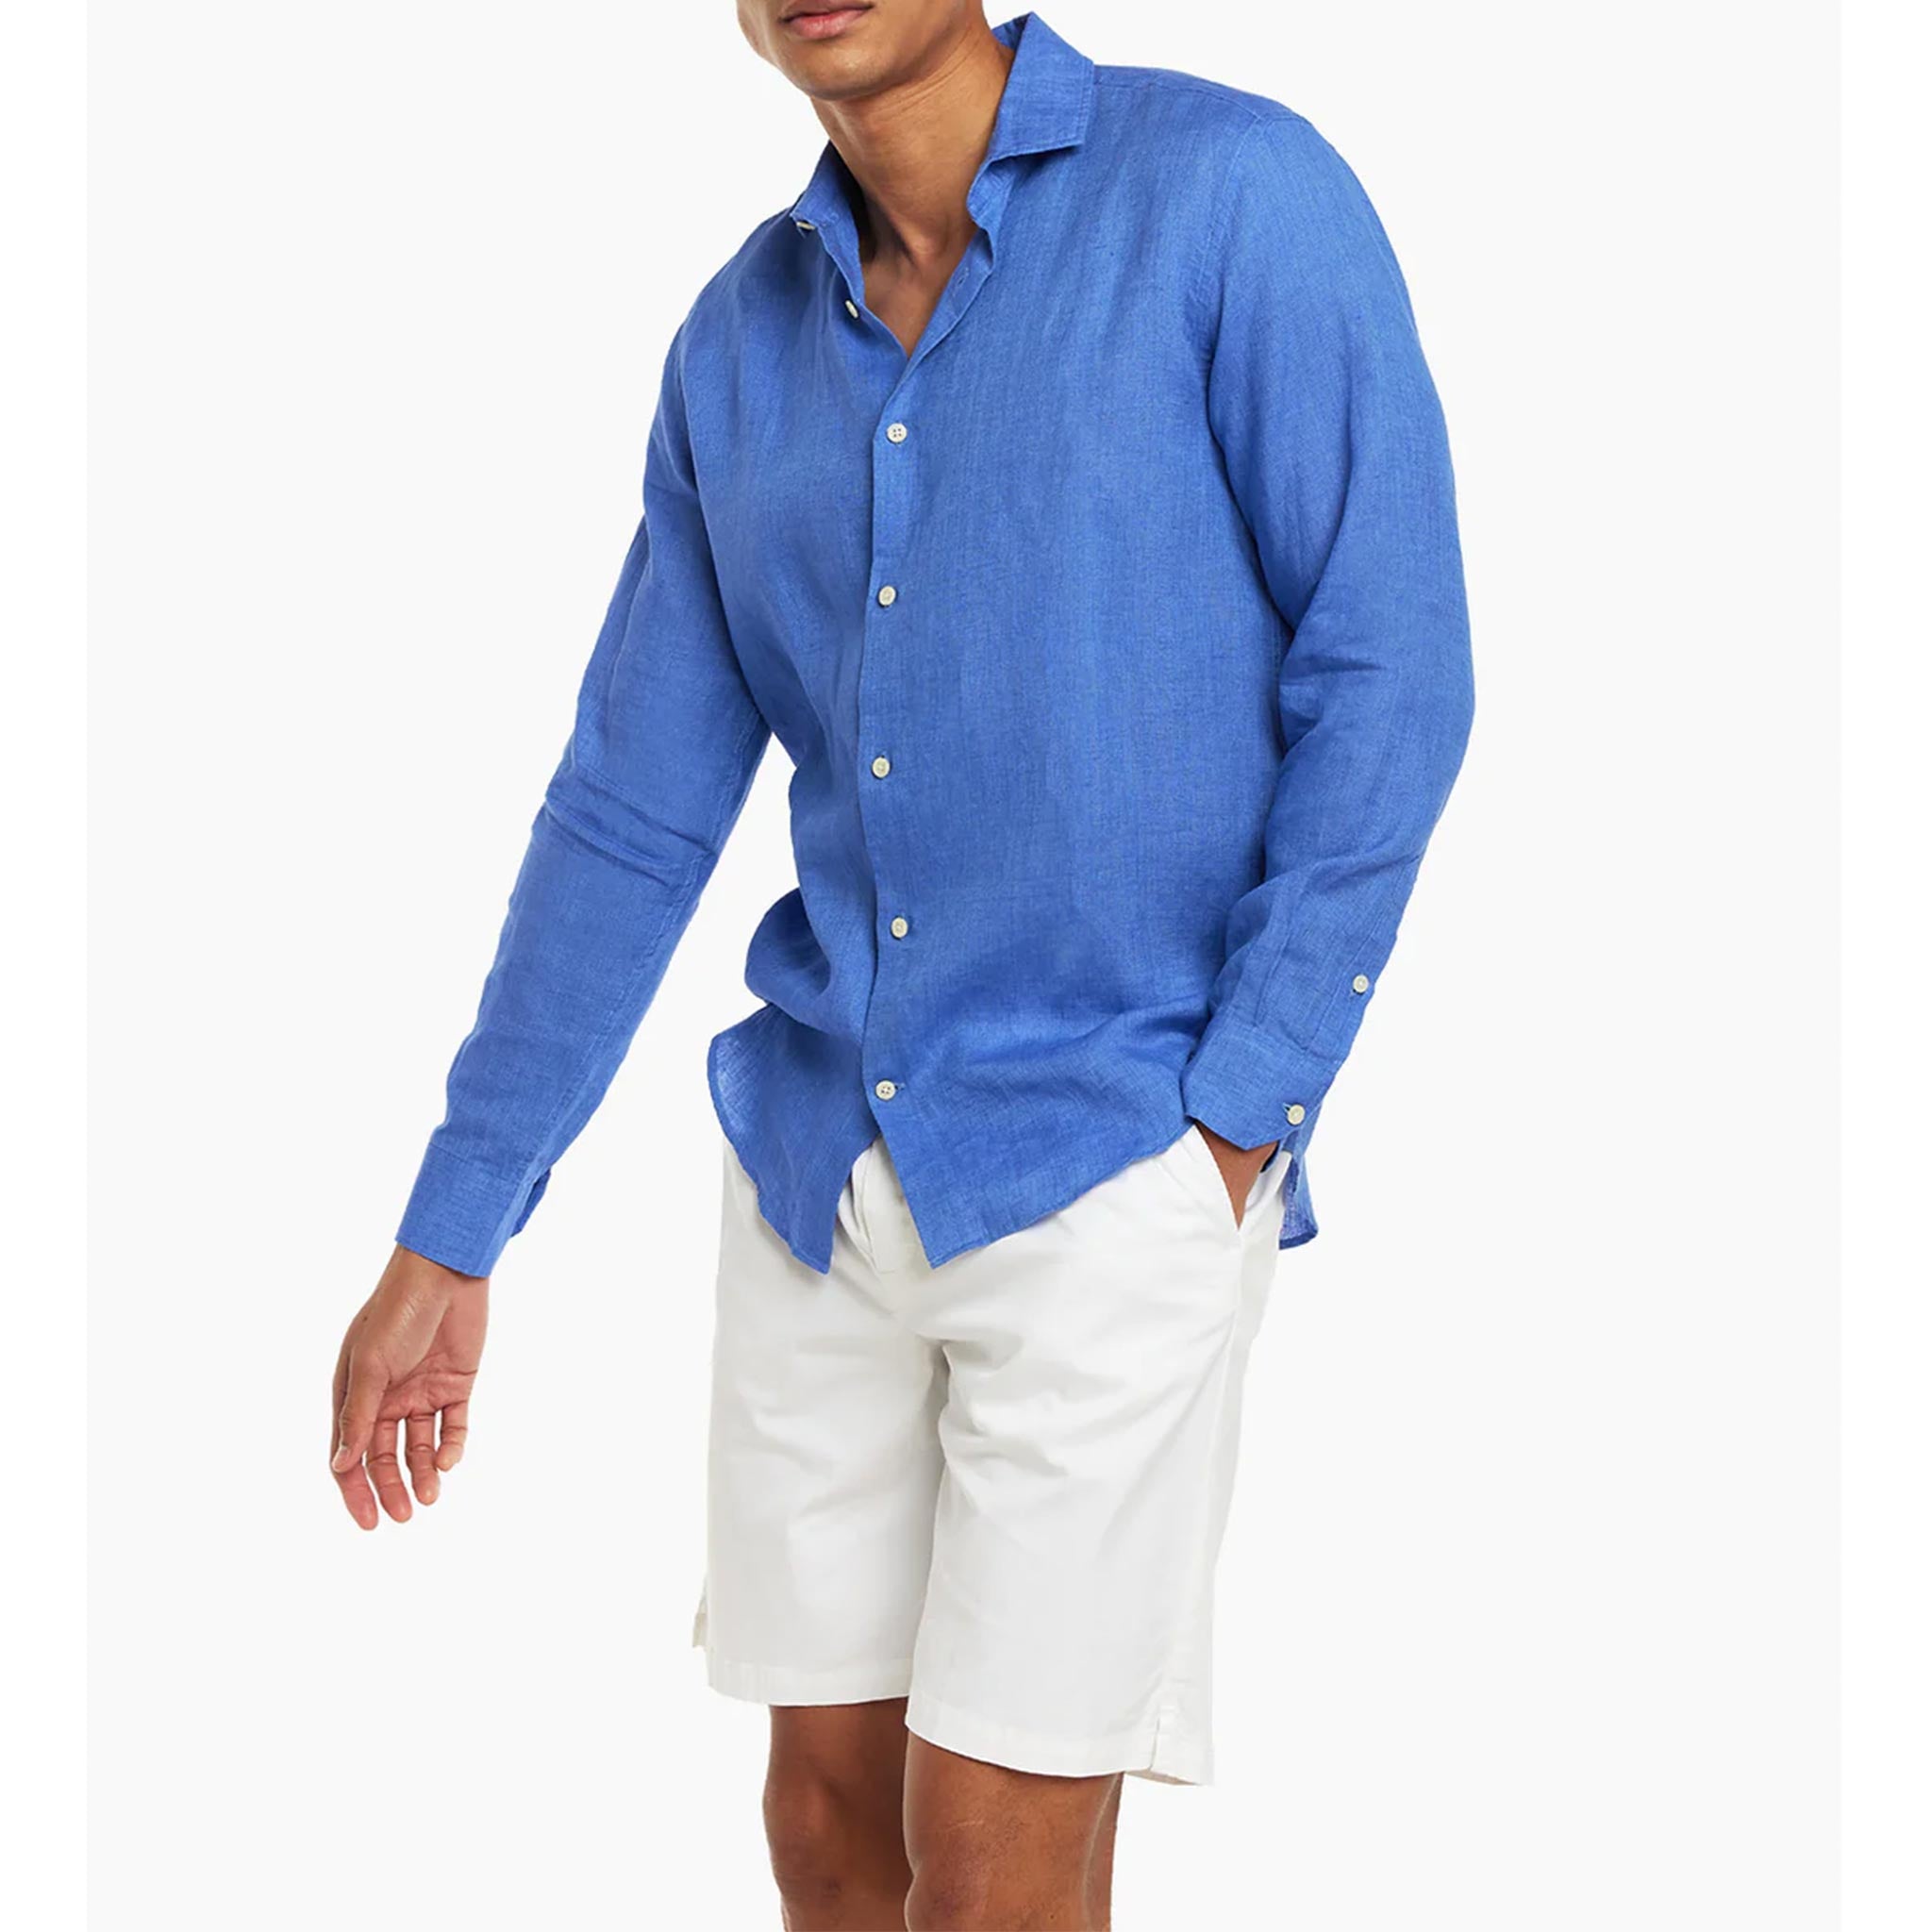 Antonio Linen Shirt in Chateau Blue